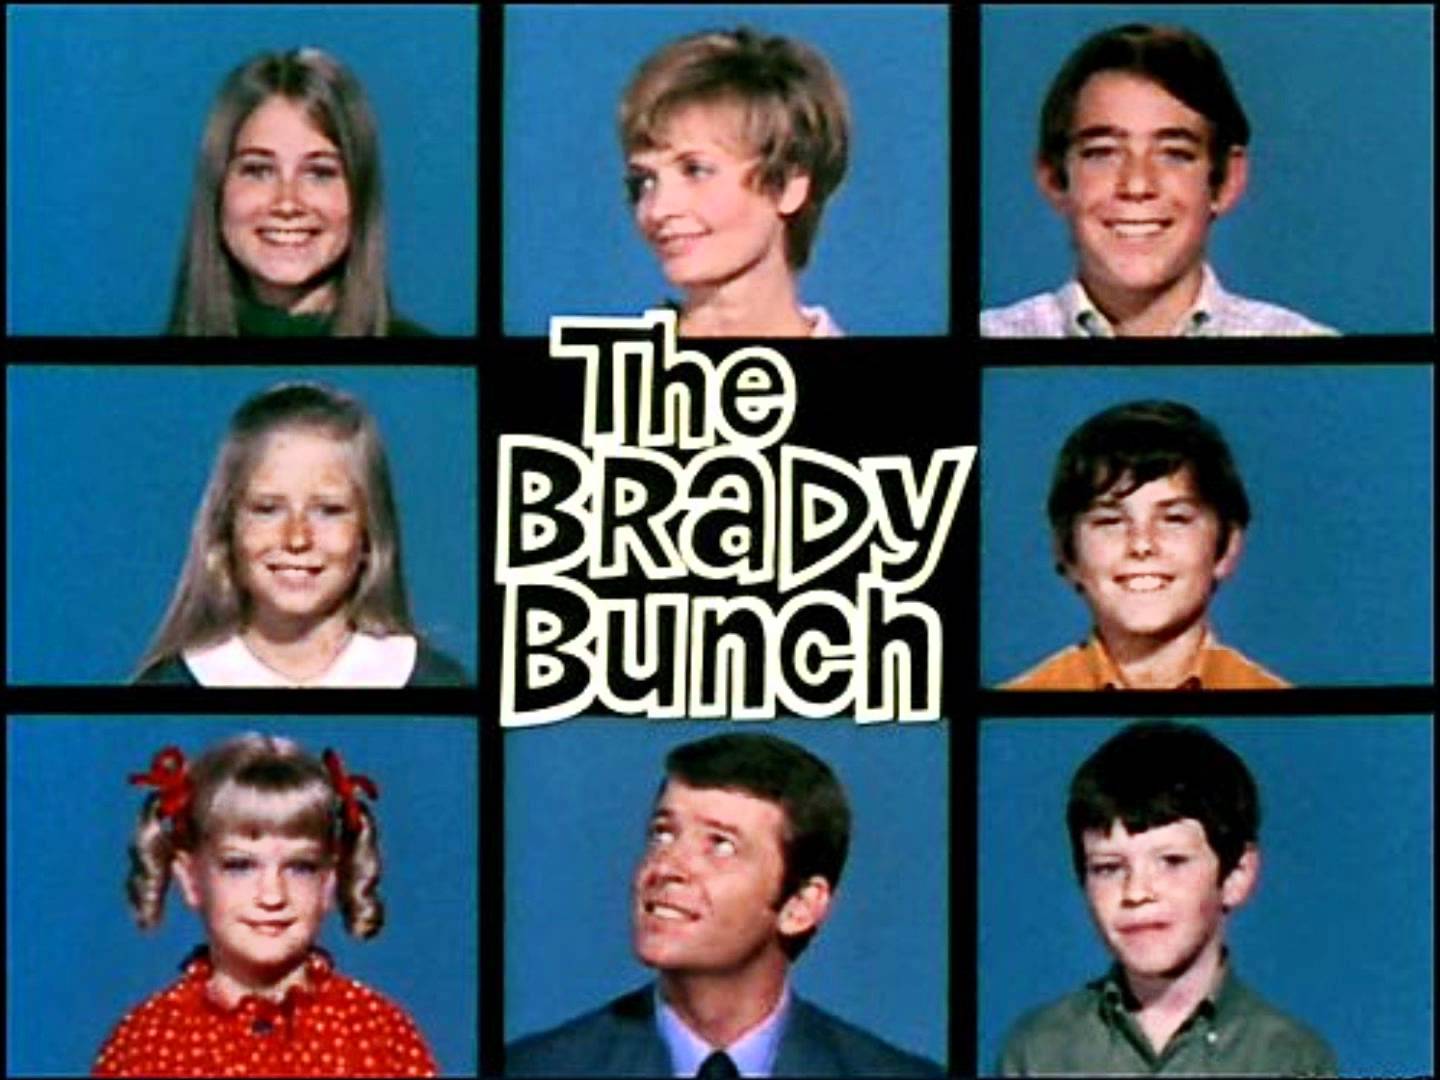 The-Brady-Bunch-TV-show-on-ABC-canceled-no-season-6.jpg